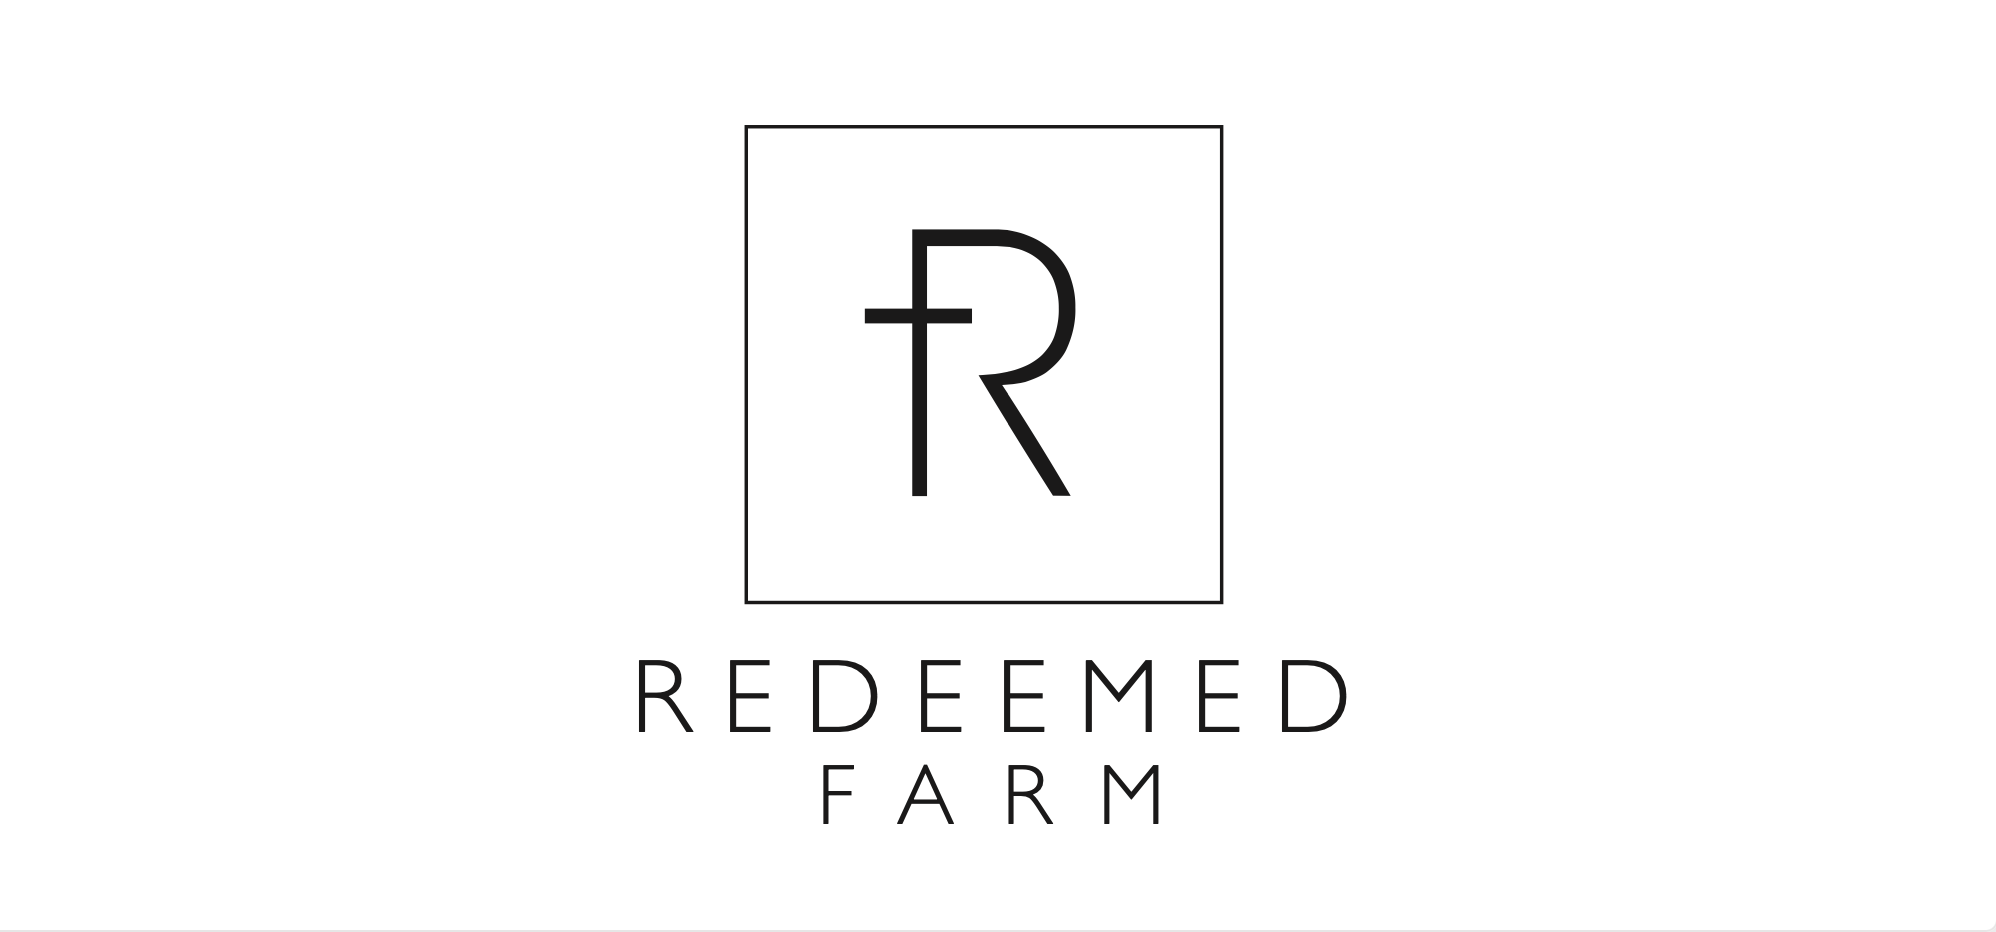 redeemed farm name tags